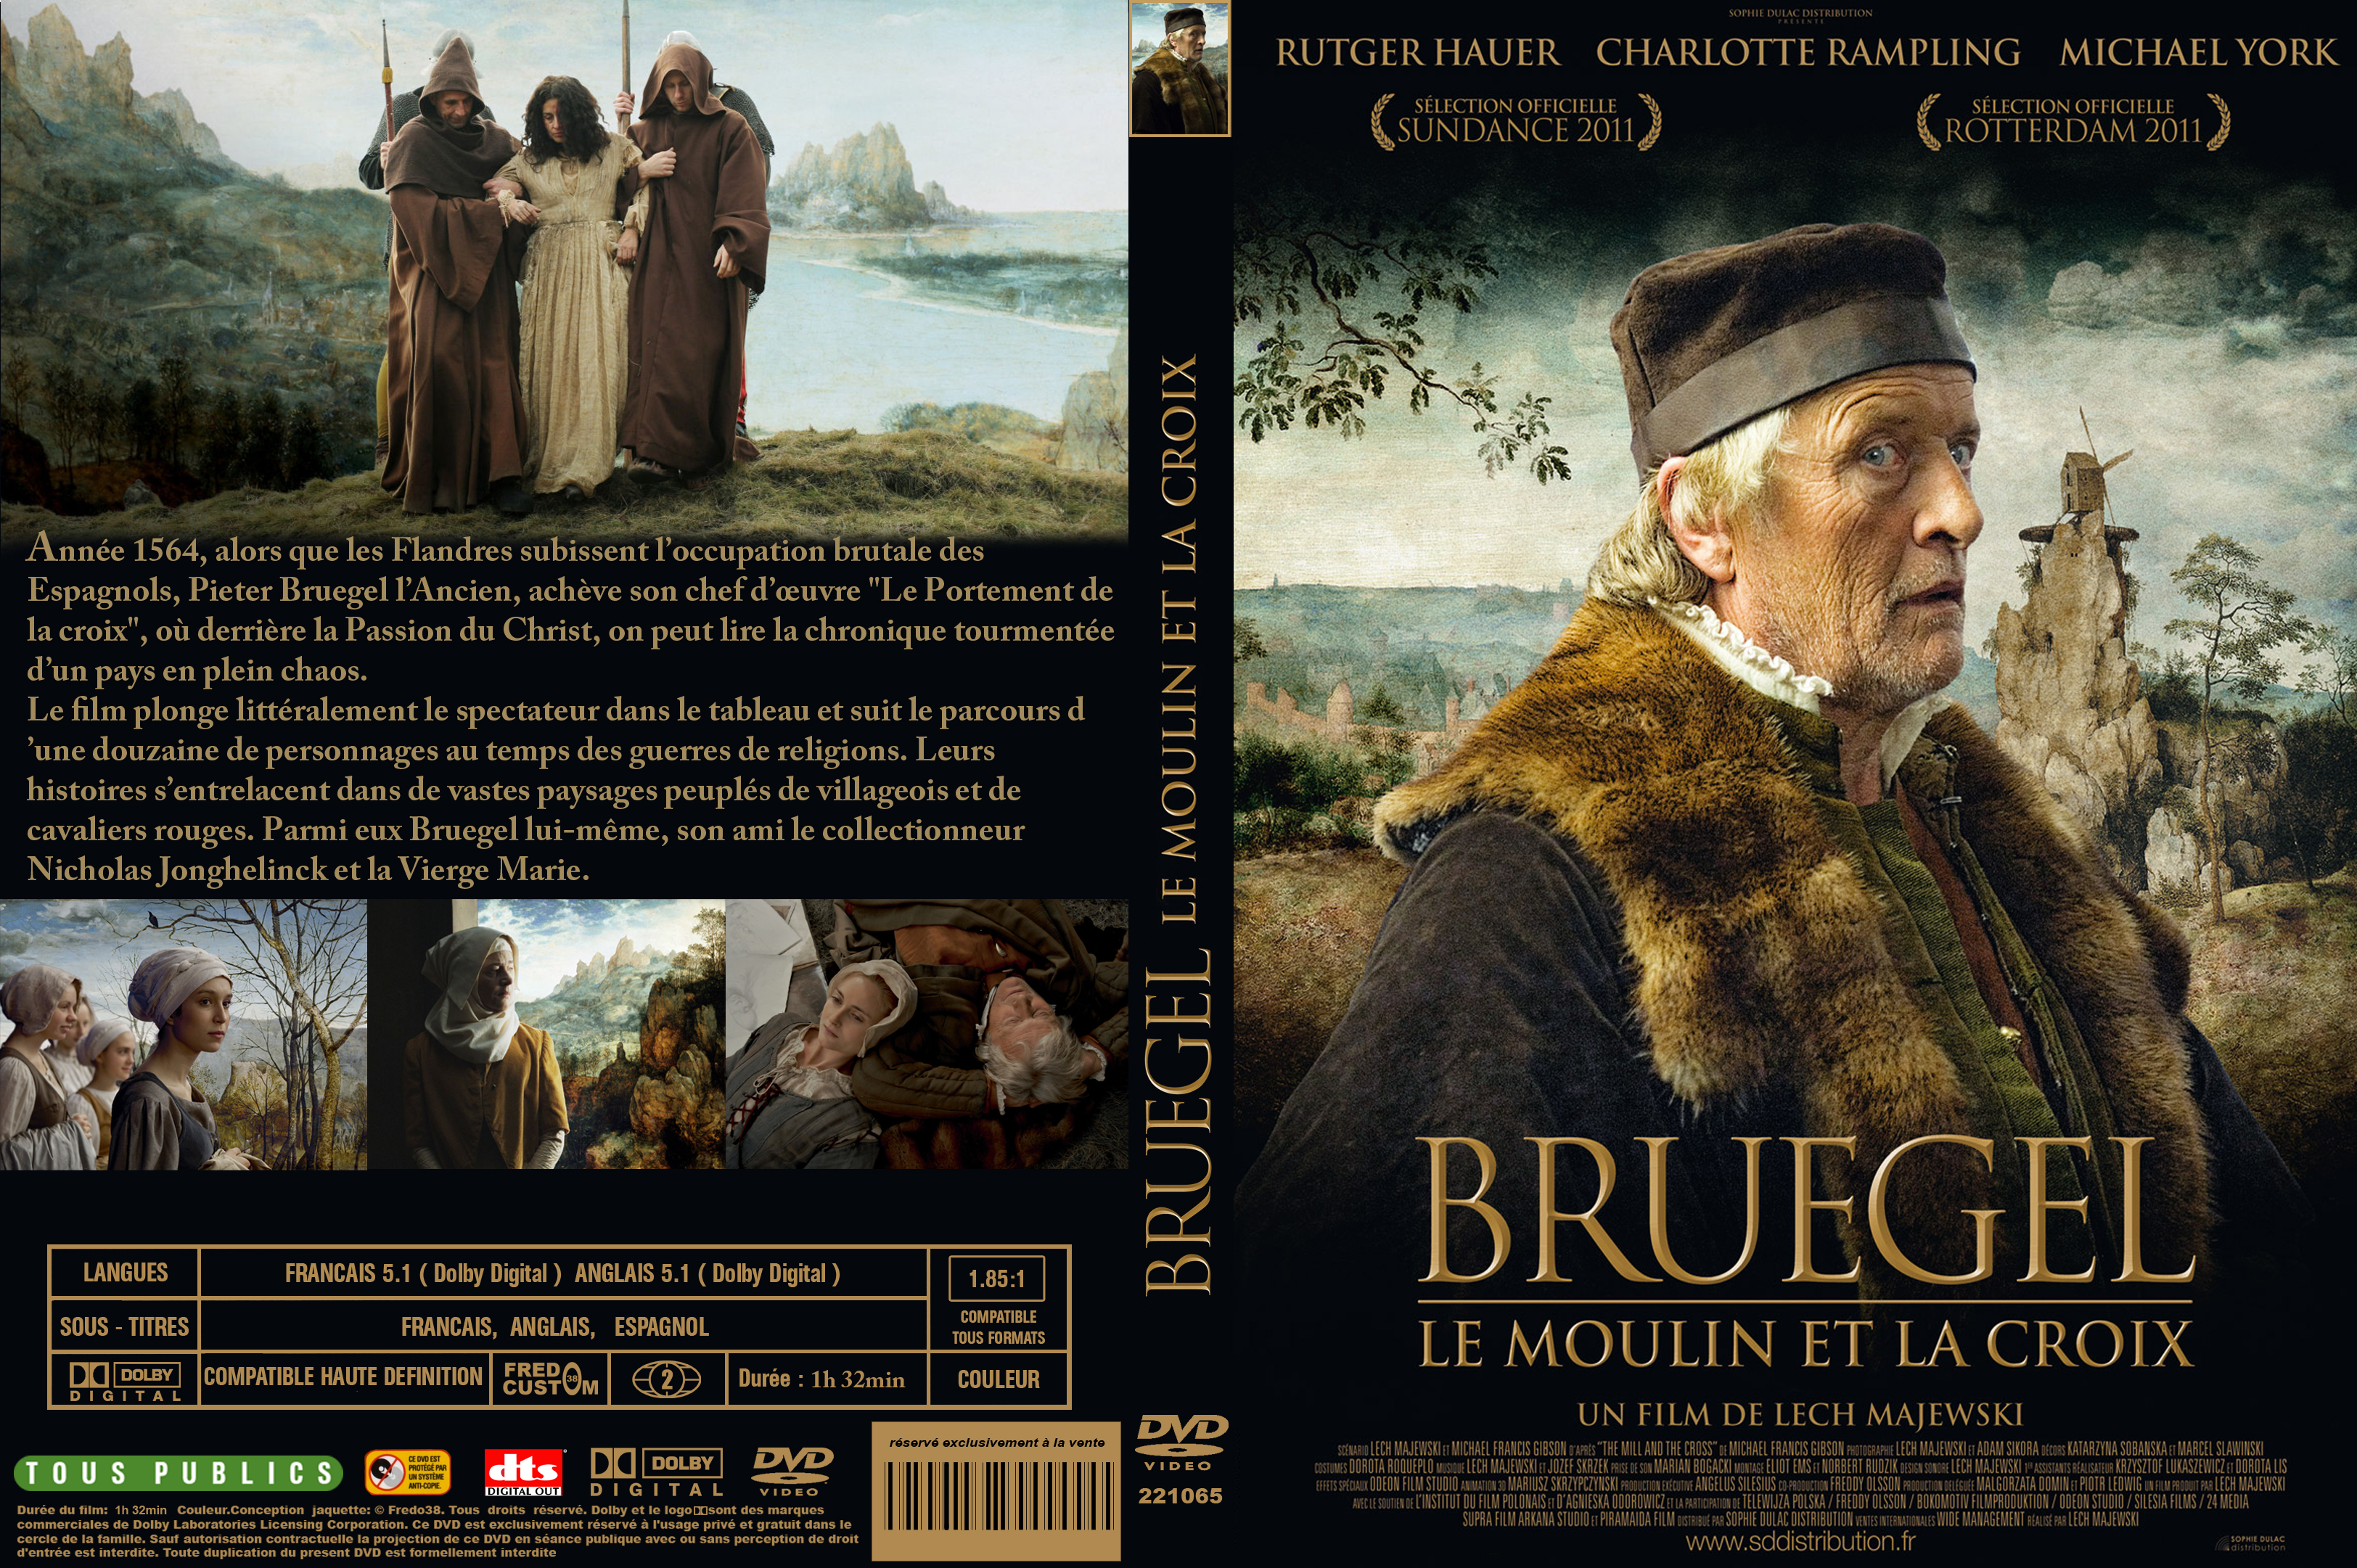 Jaquette DVD Bruegel le moulin et la croix custom